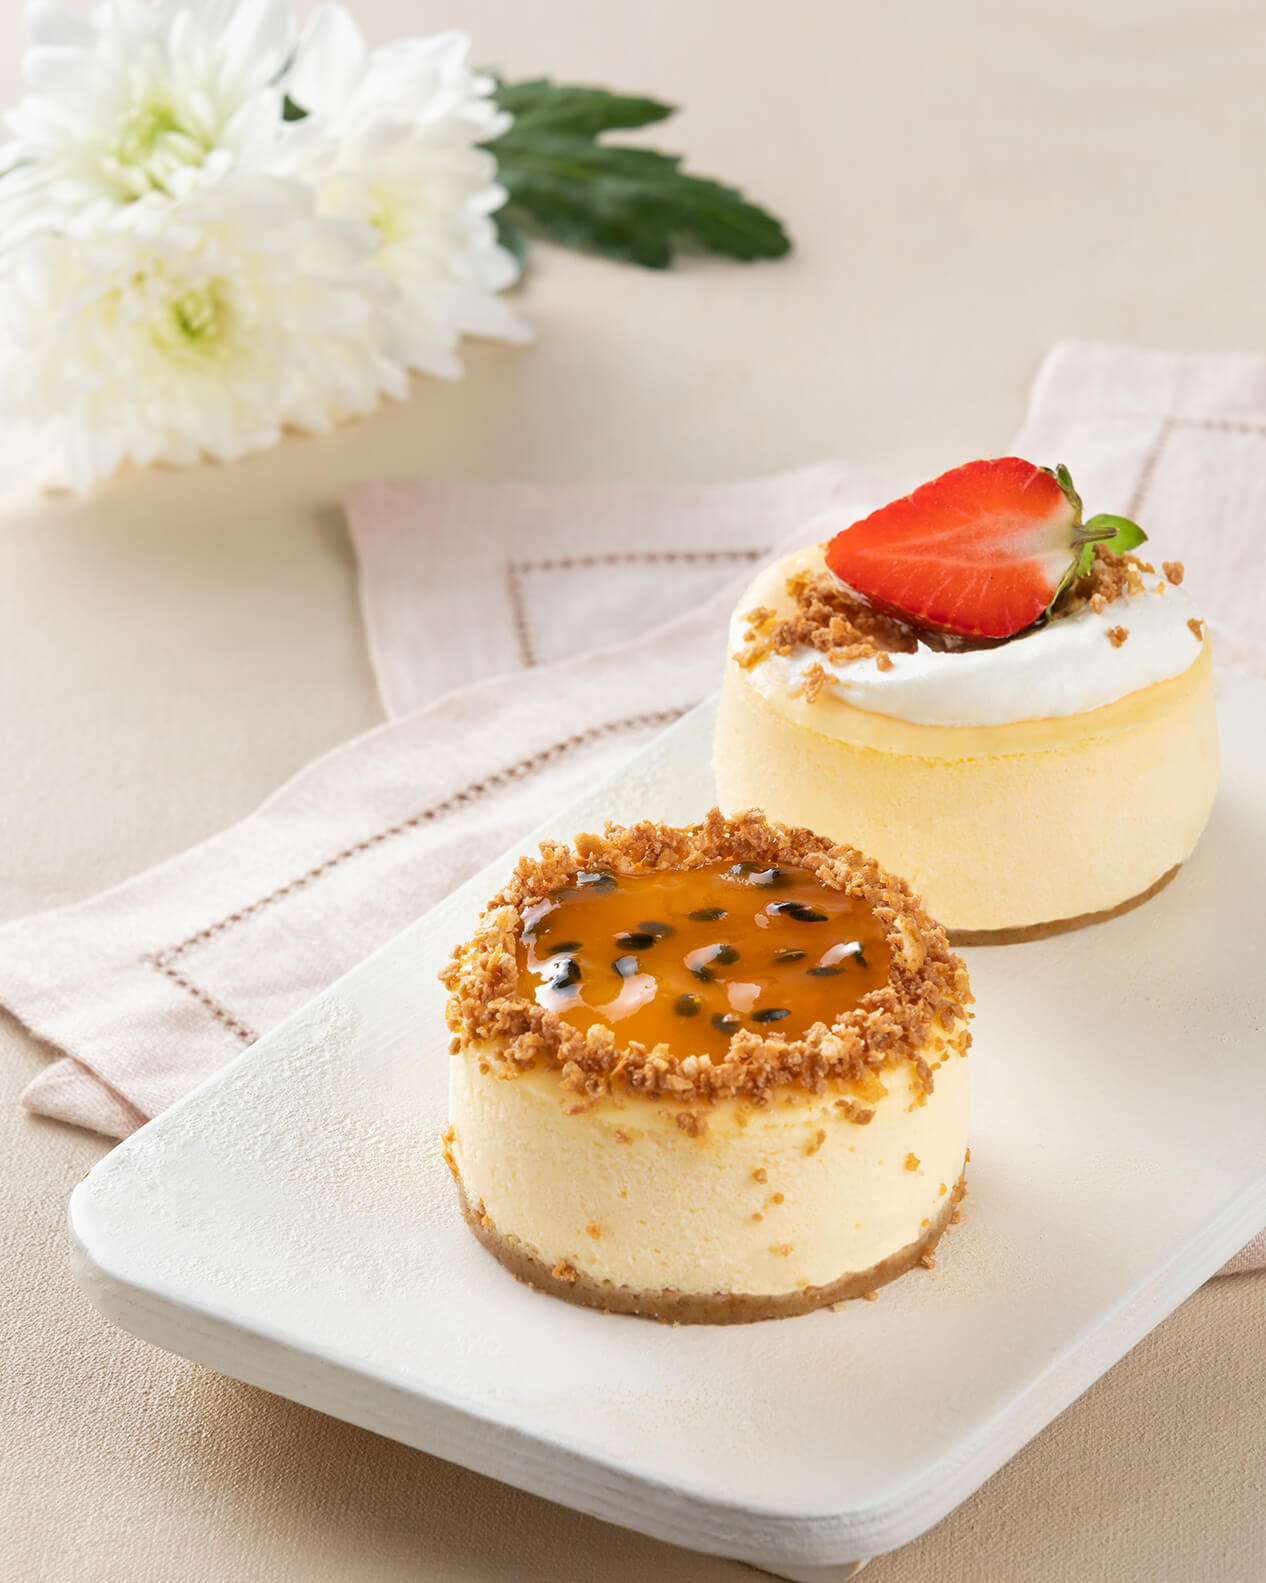 Yuzu Cheesecake with Passion Fruit